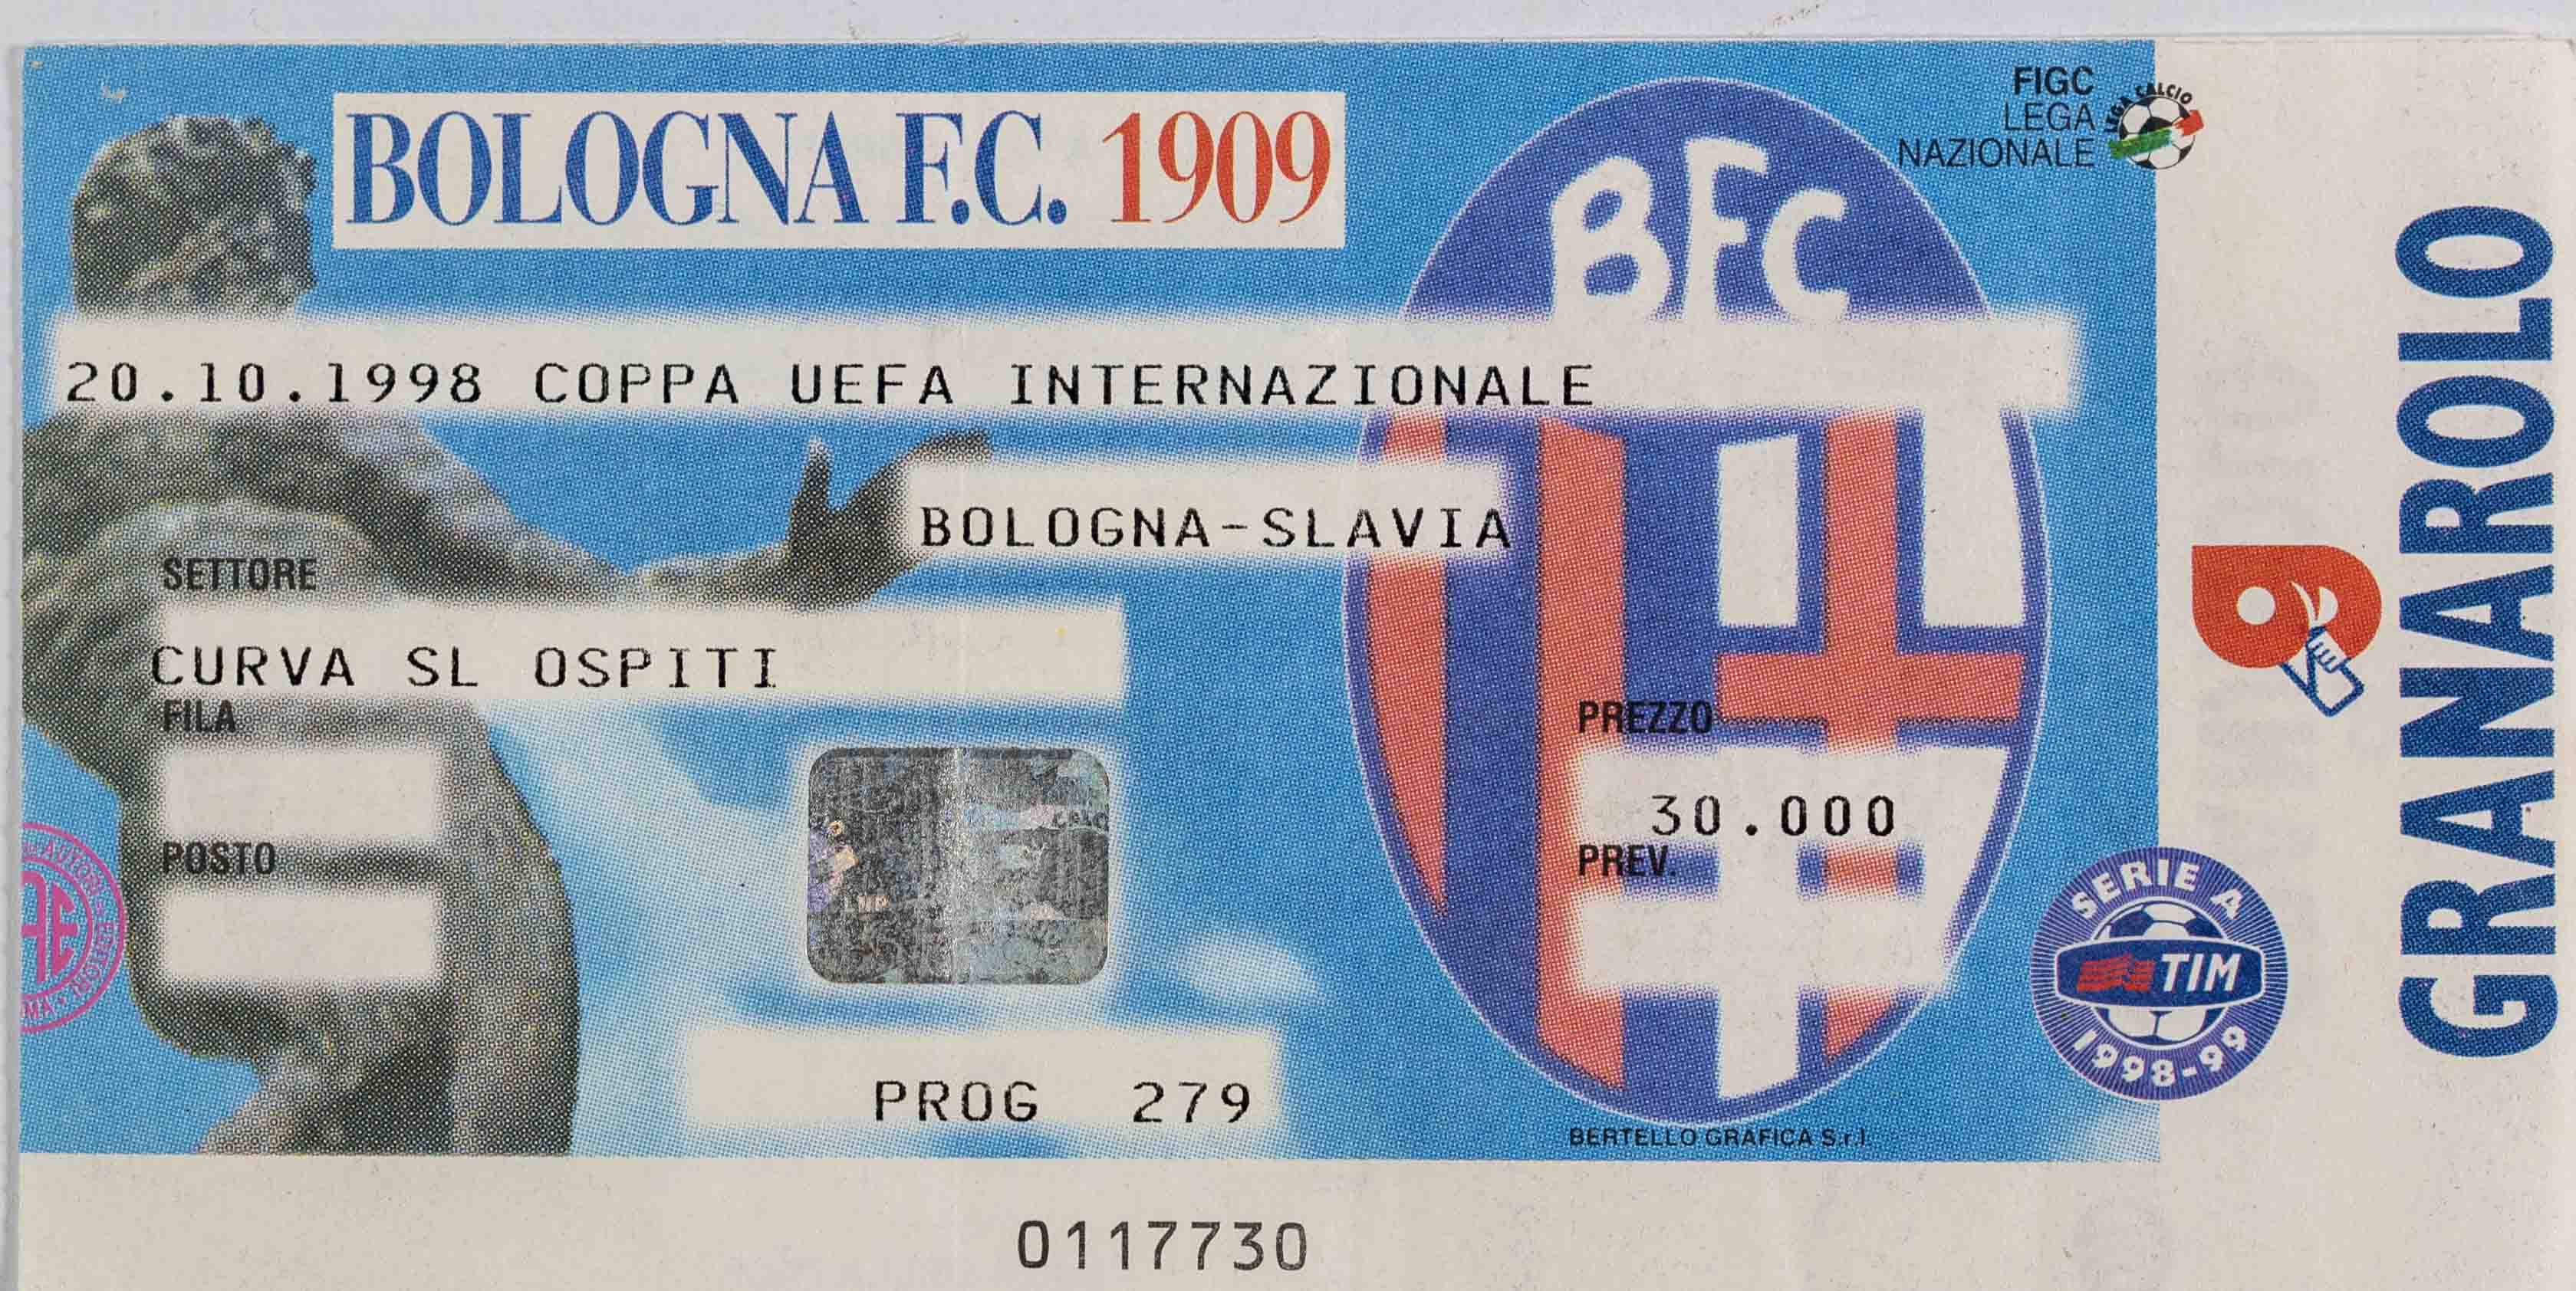 Vstupenka UEFA, Bologna FC 1909 v. Slavia Praga, 1998